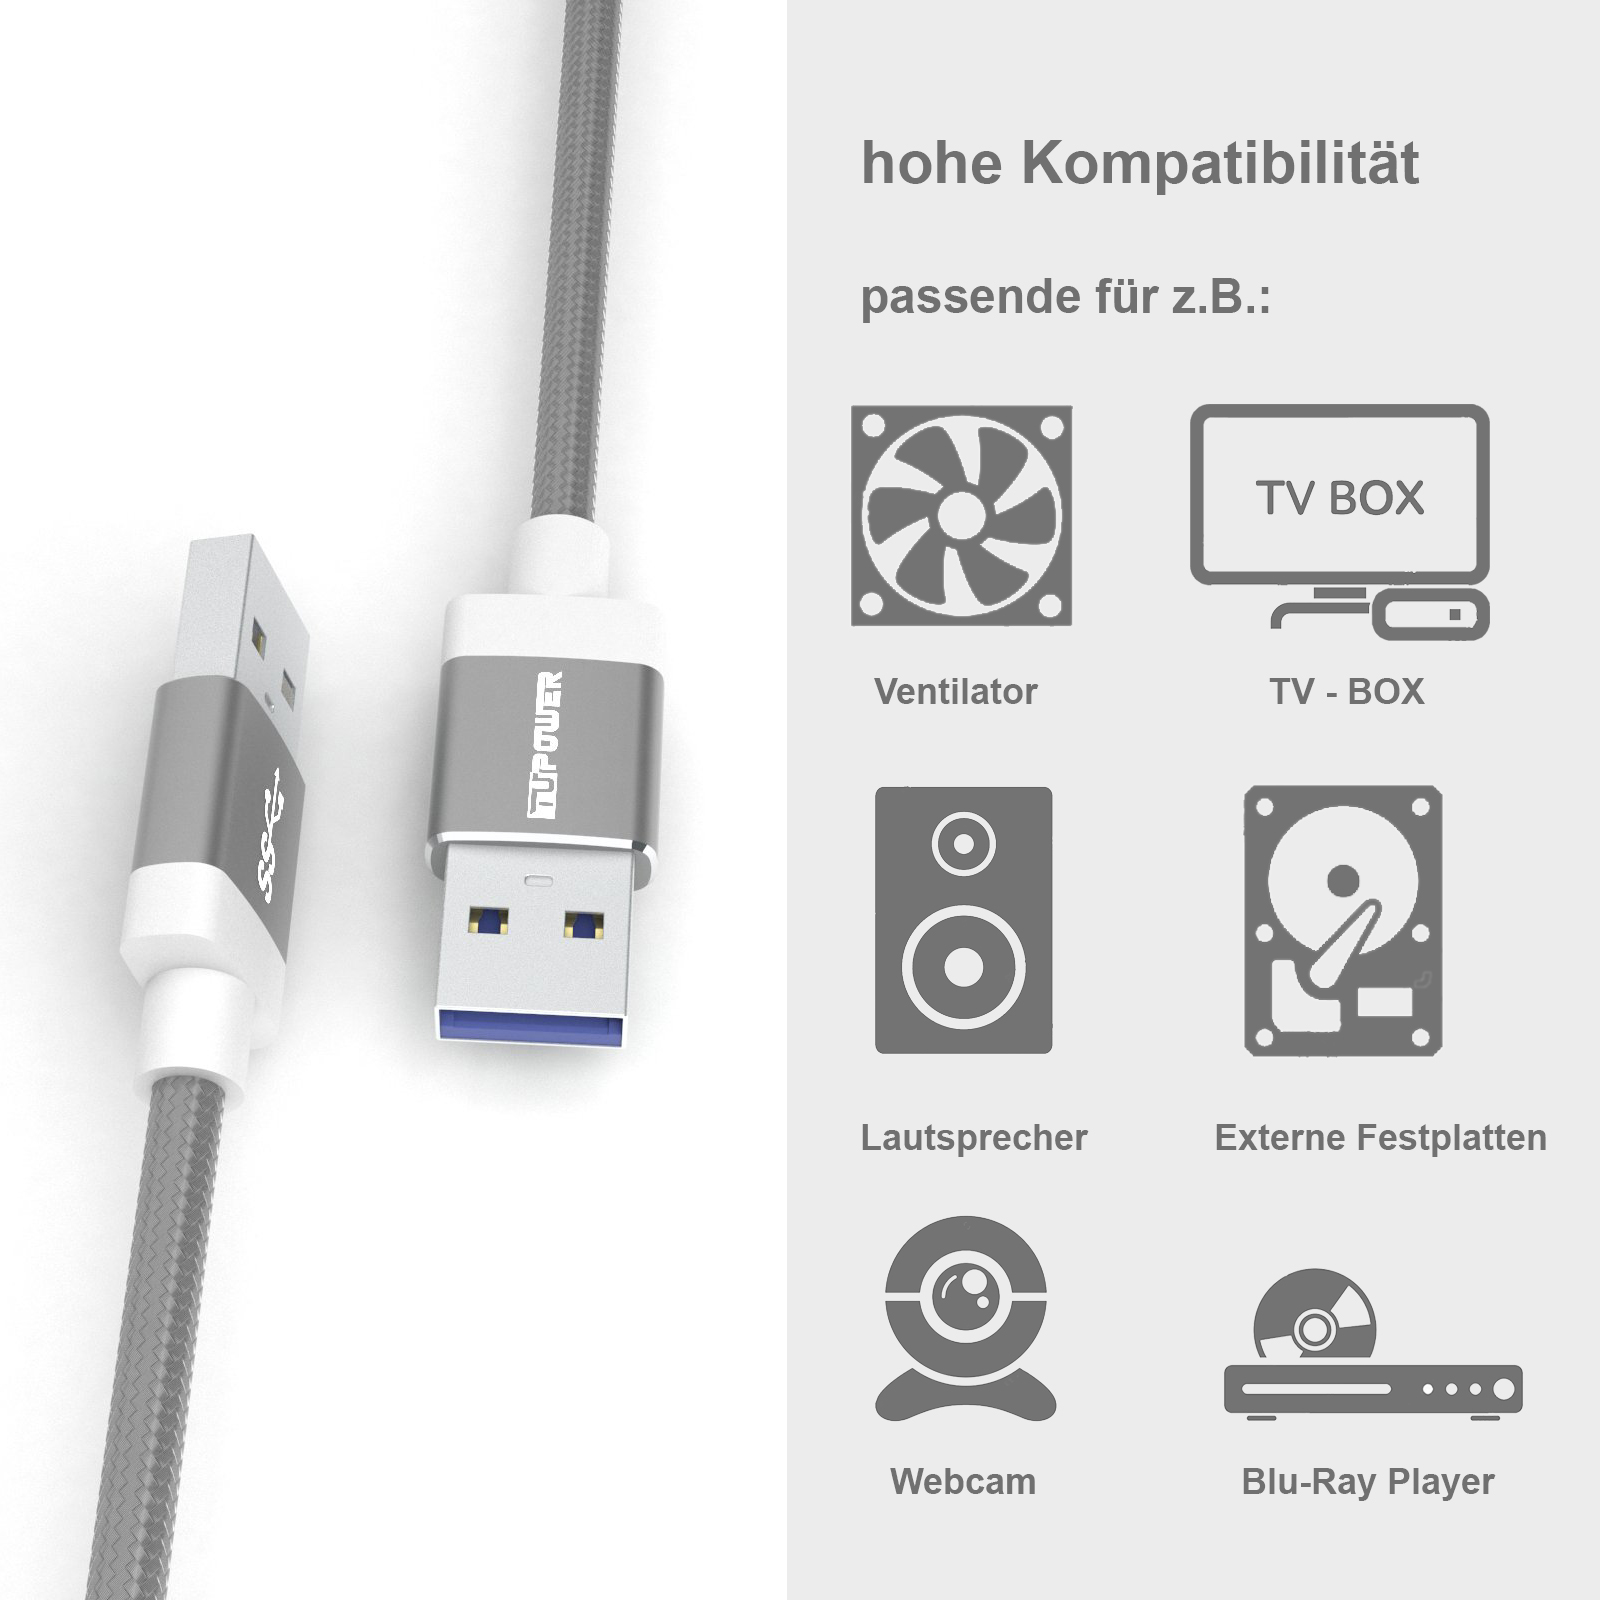 USB K56 3.0 TUPOWER Verbindungskabel Kabel USB 1m Verbindung